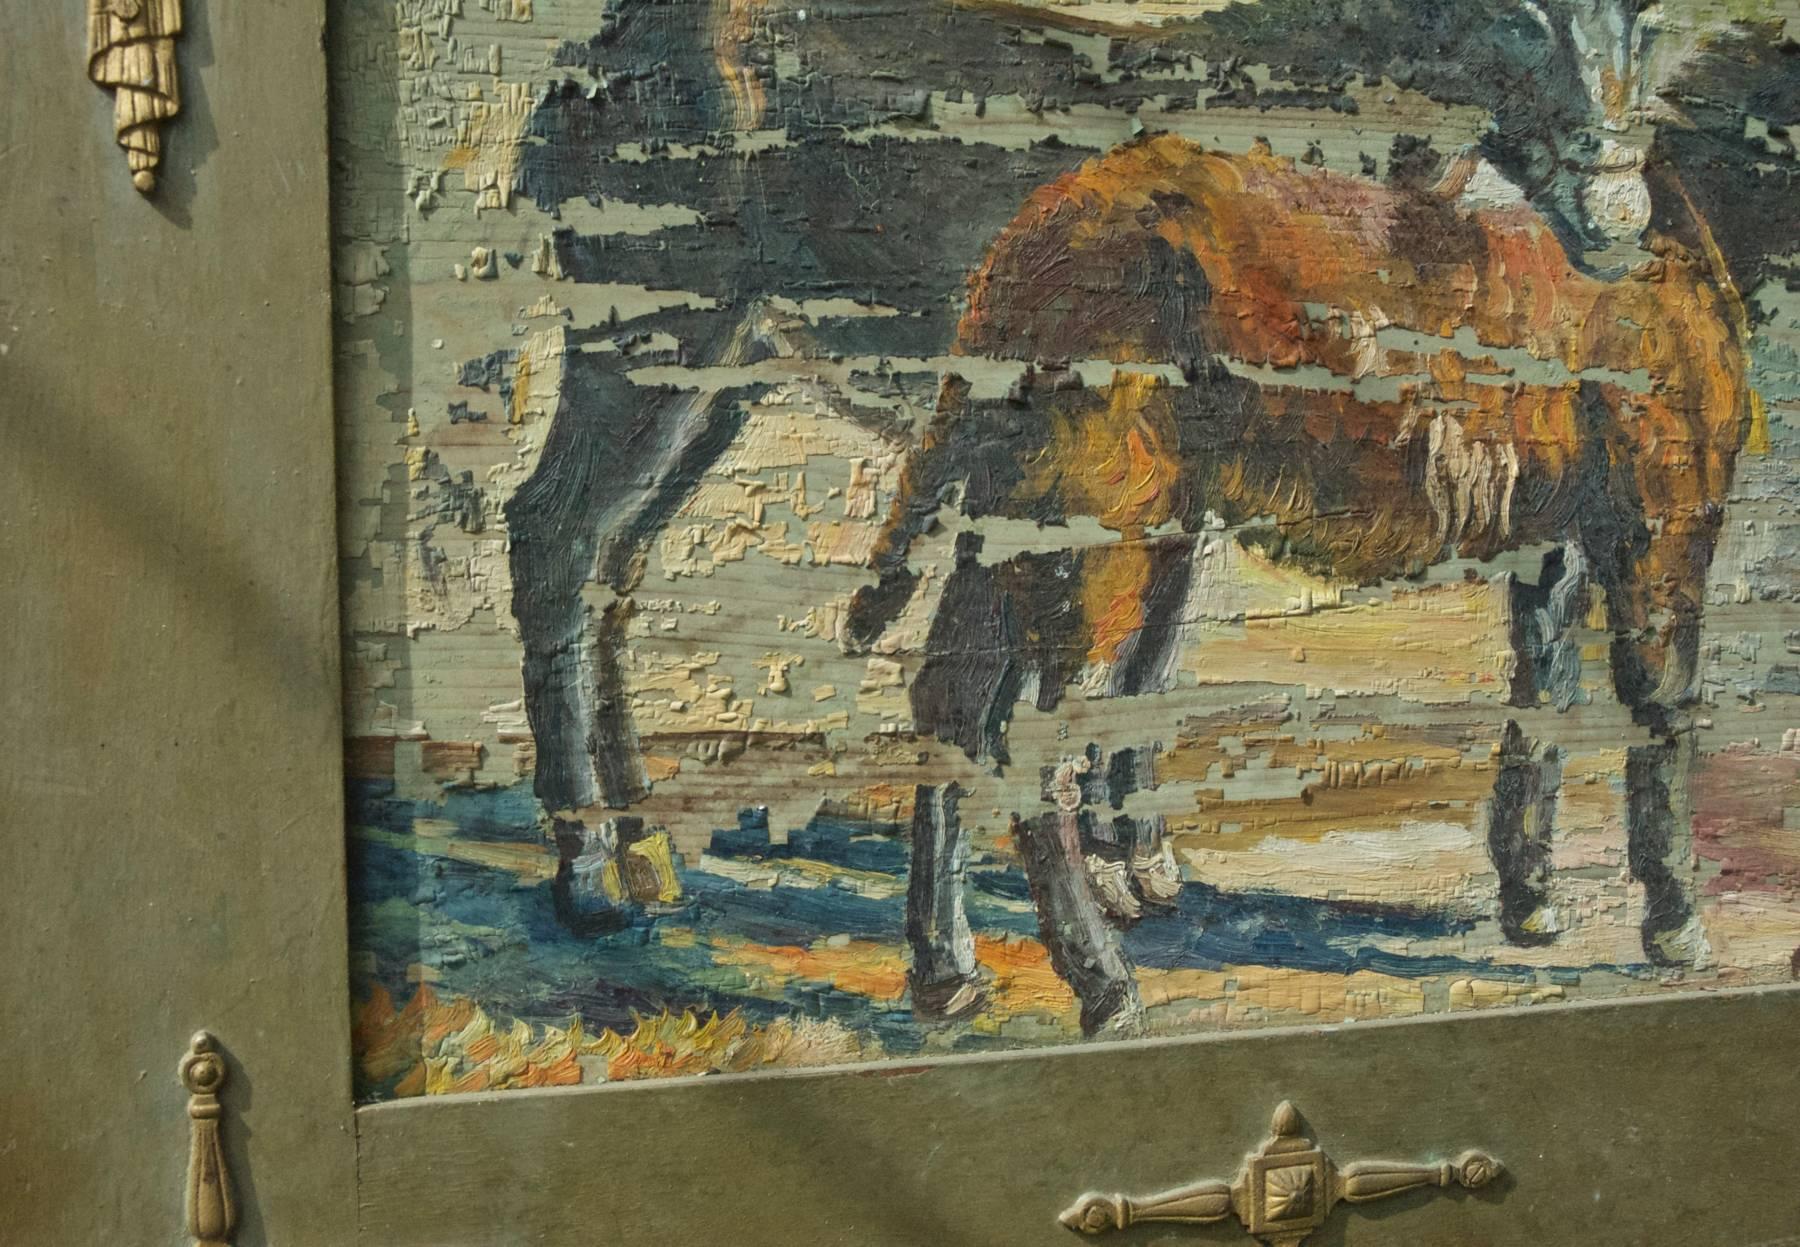 Unknown Folk Art Painting of Donkeys